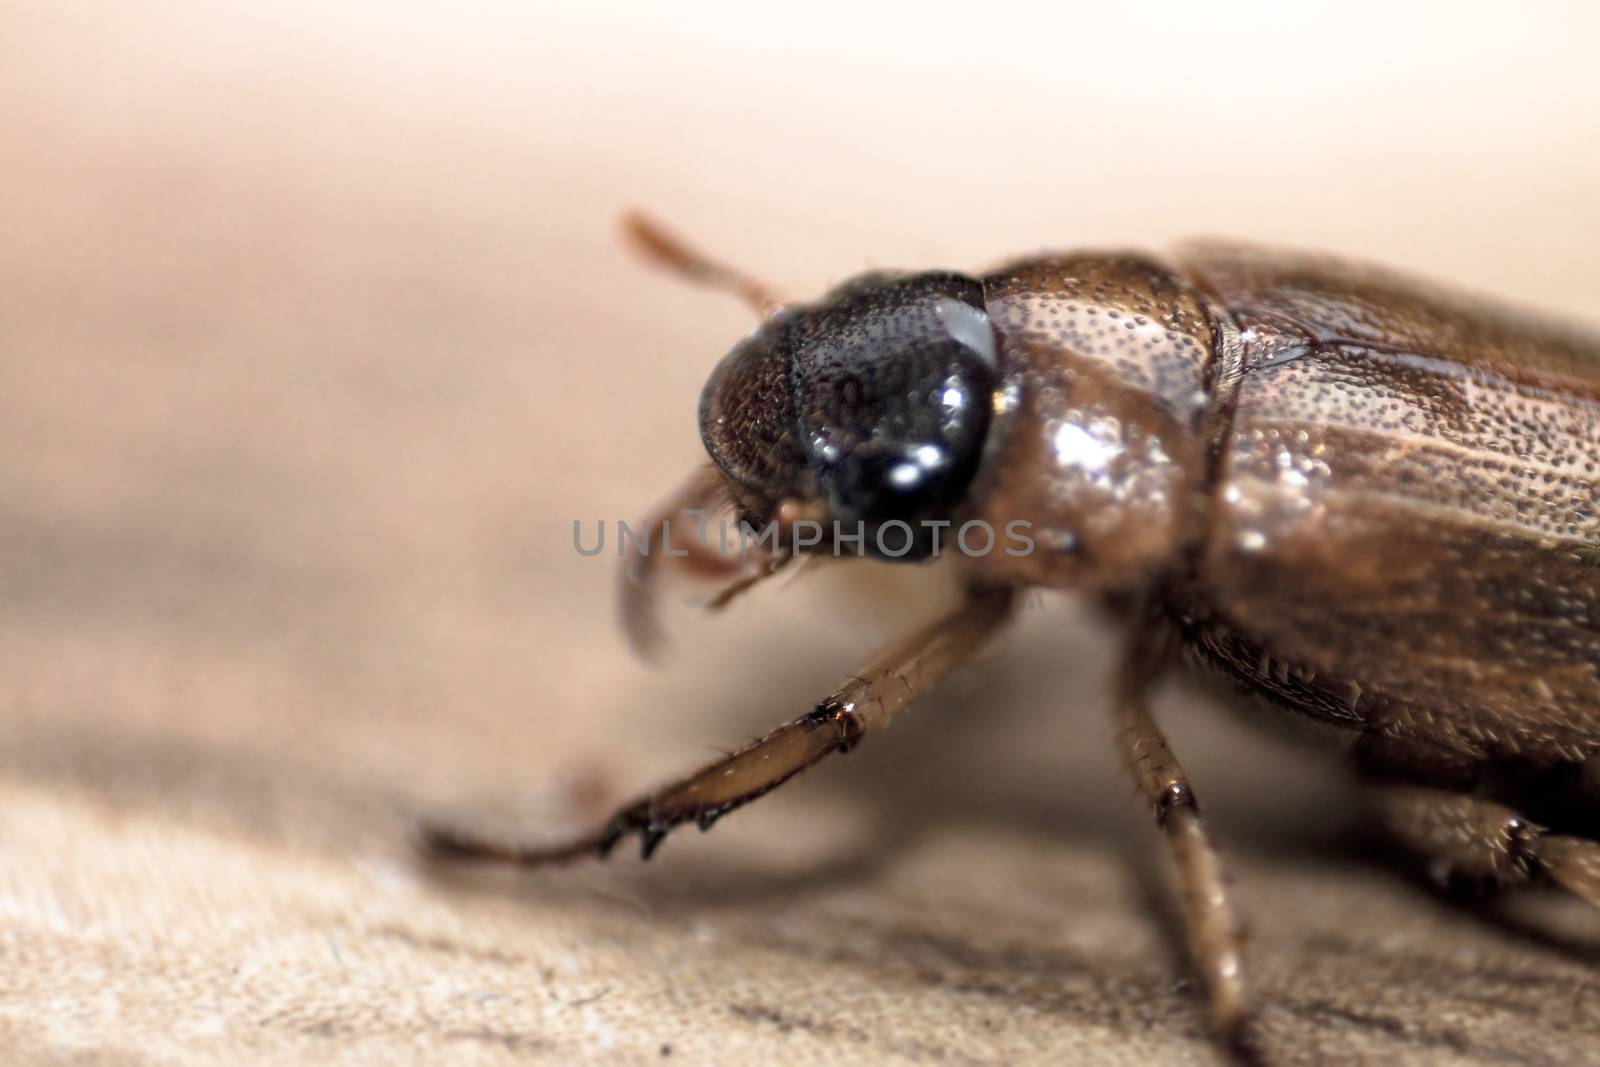 night beetle extreme close up on ground by stockbp